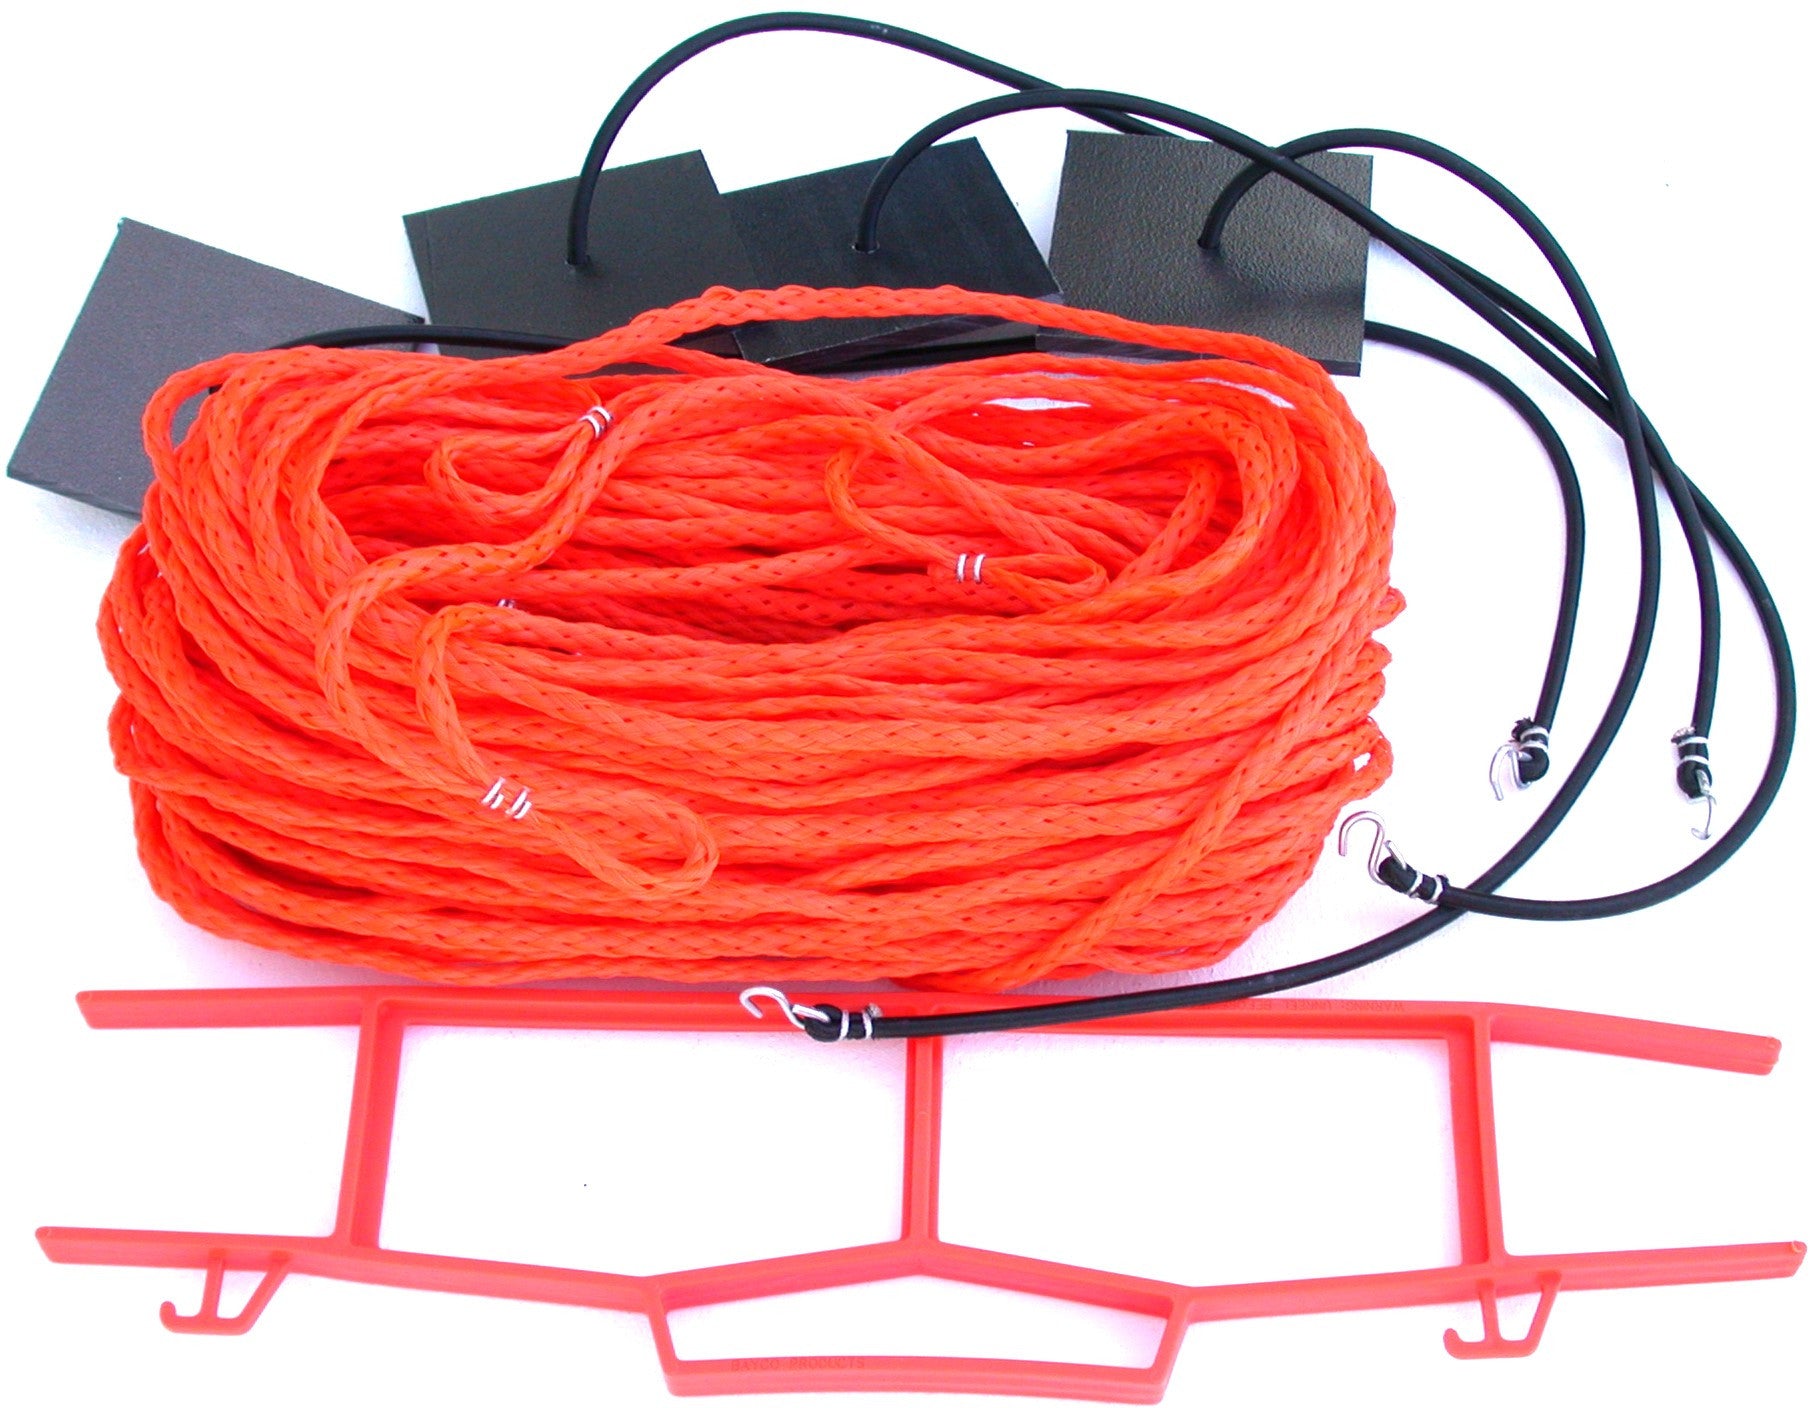 25OB-orange 1/4-inch non-adjustable rope boundary, sand plates, storage winder